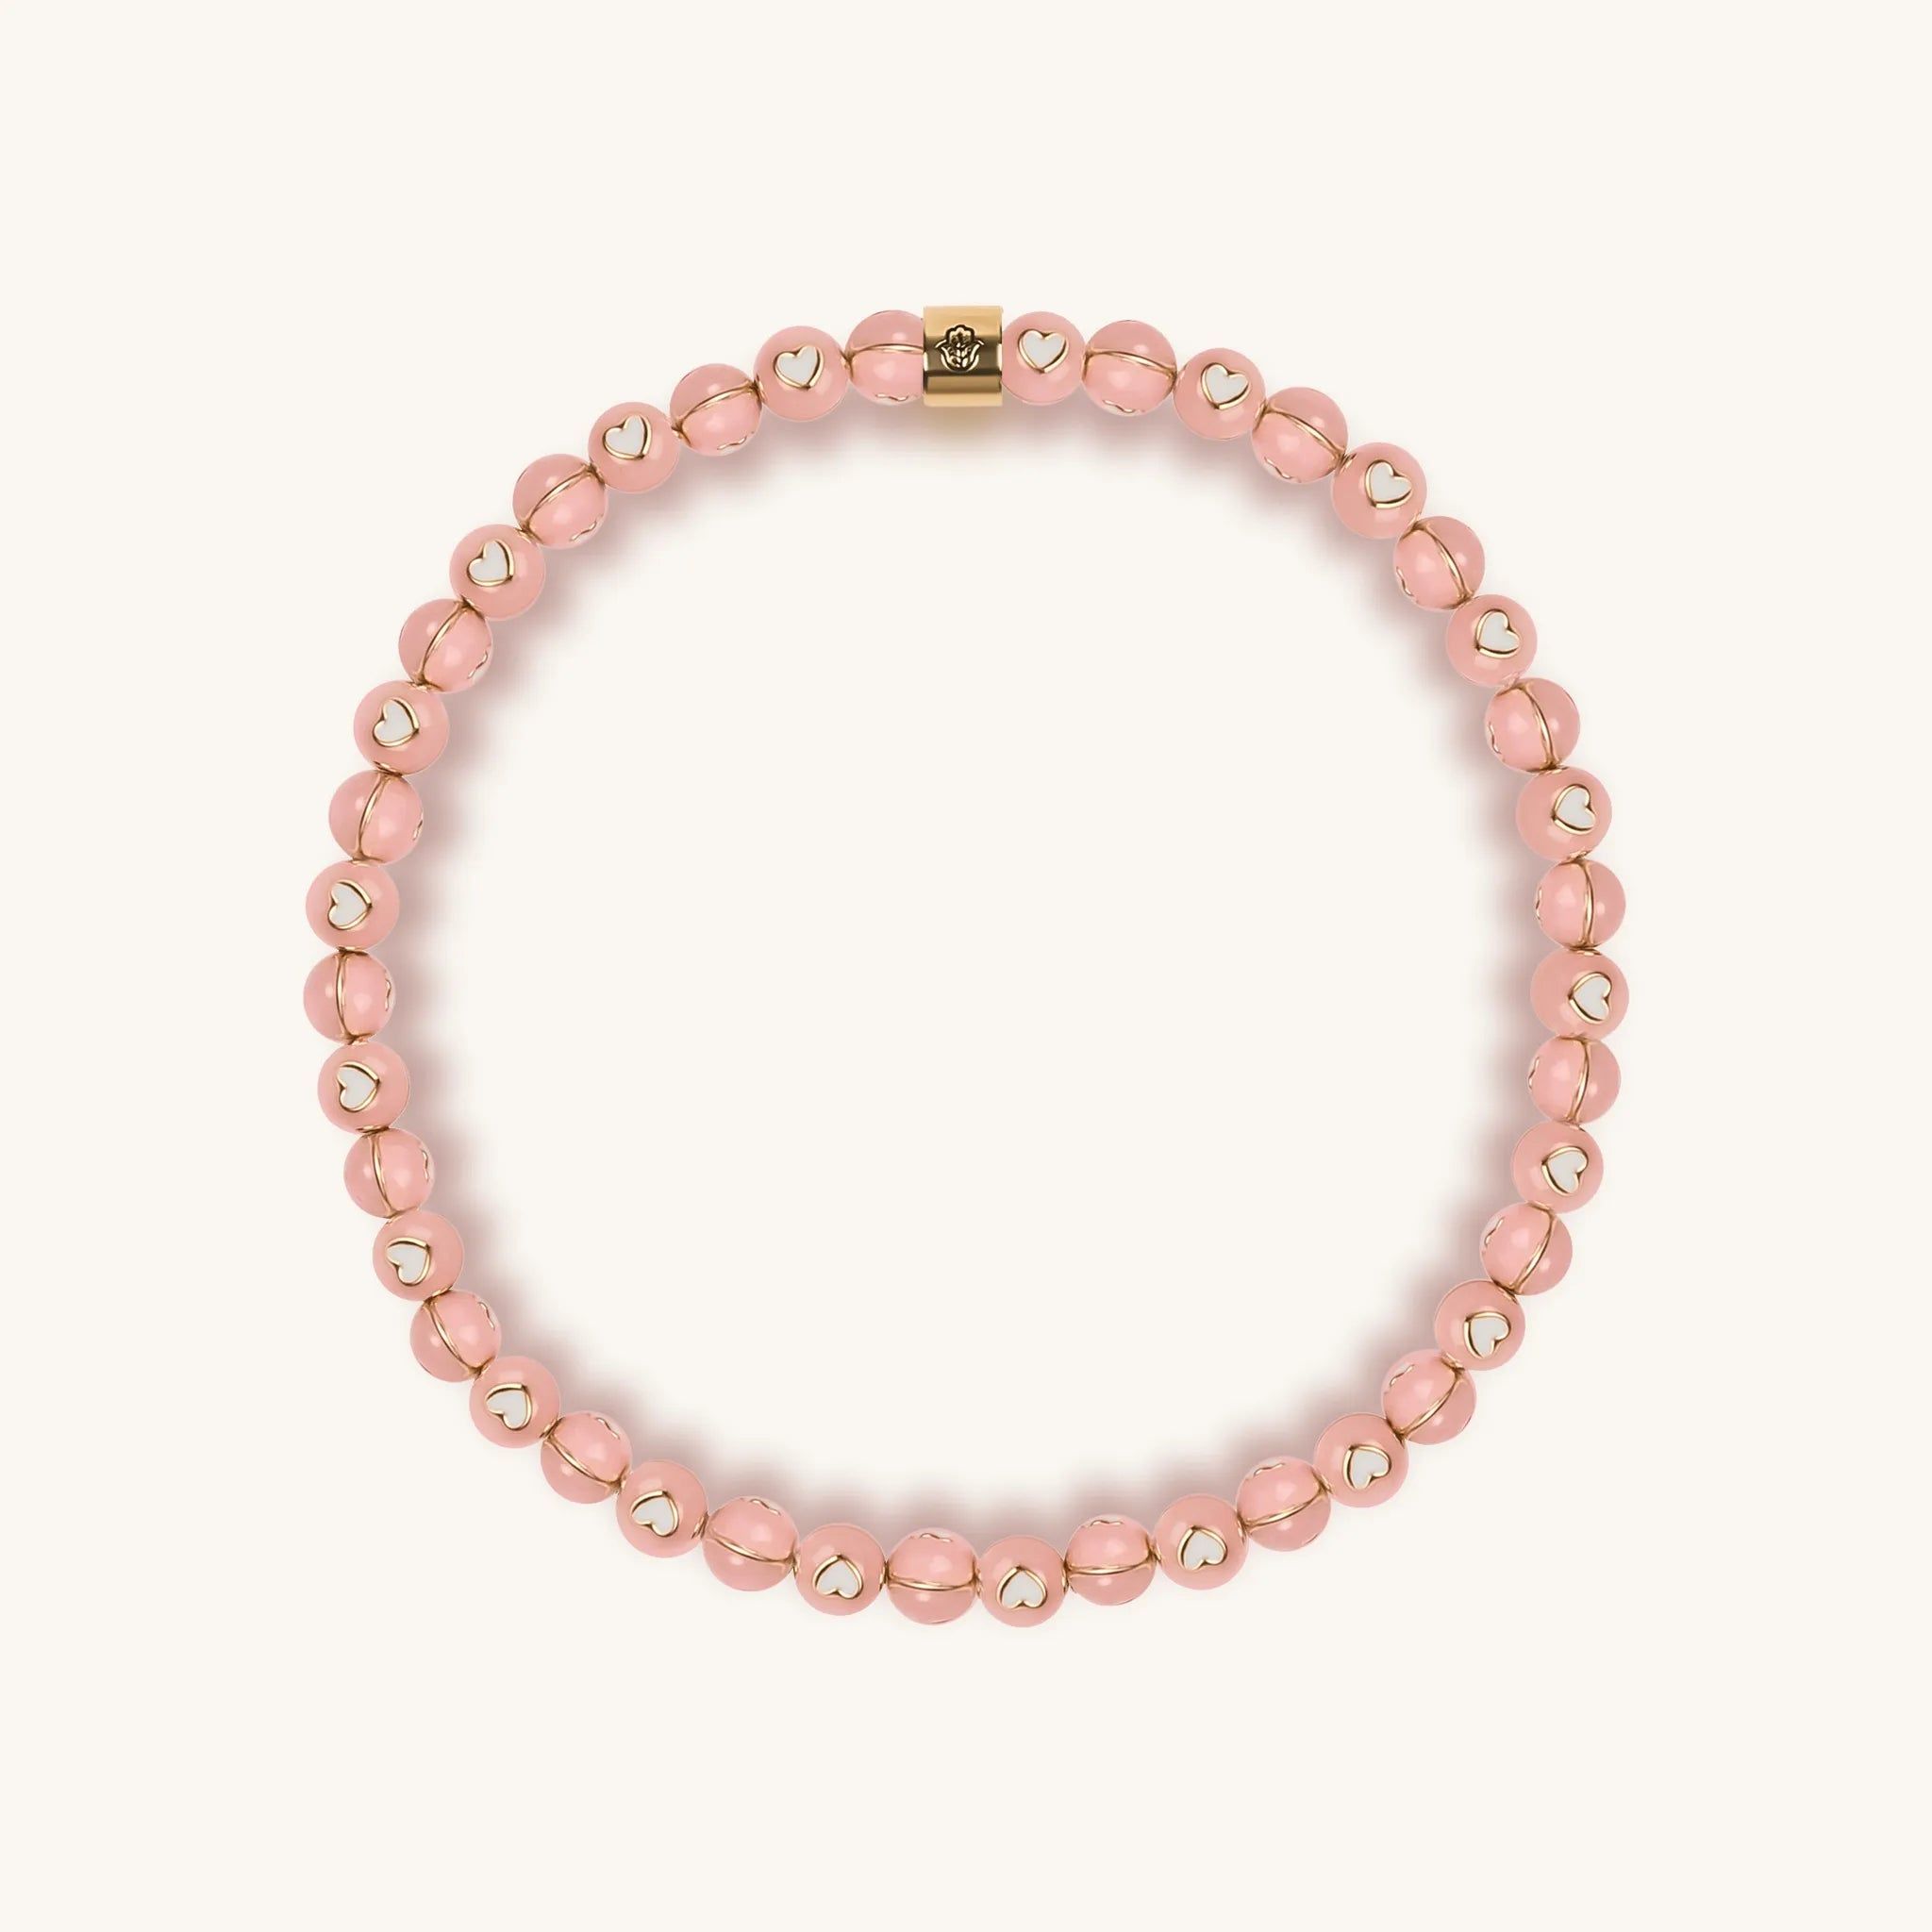 Profound Love - Pink Enamel Heart Charm Bracelet | Karma and Luck